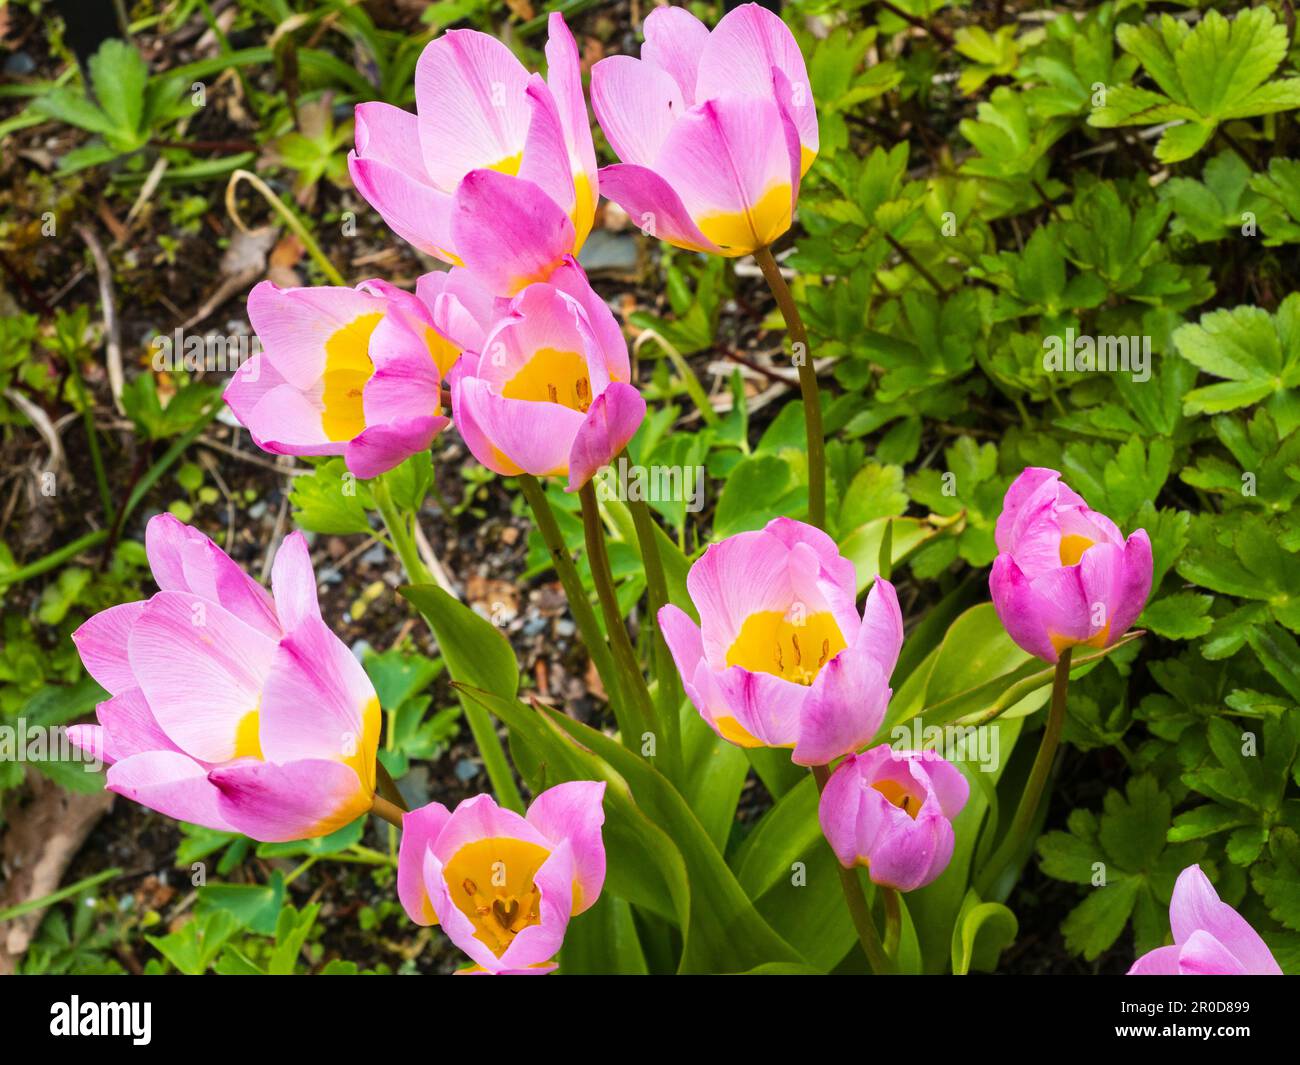 Flower and foliage of the spring blooming botanical tulip, Tulipa saxatalis (Bakeri Group) 'Lilac Wonder' Stock Photo